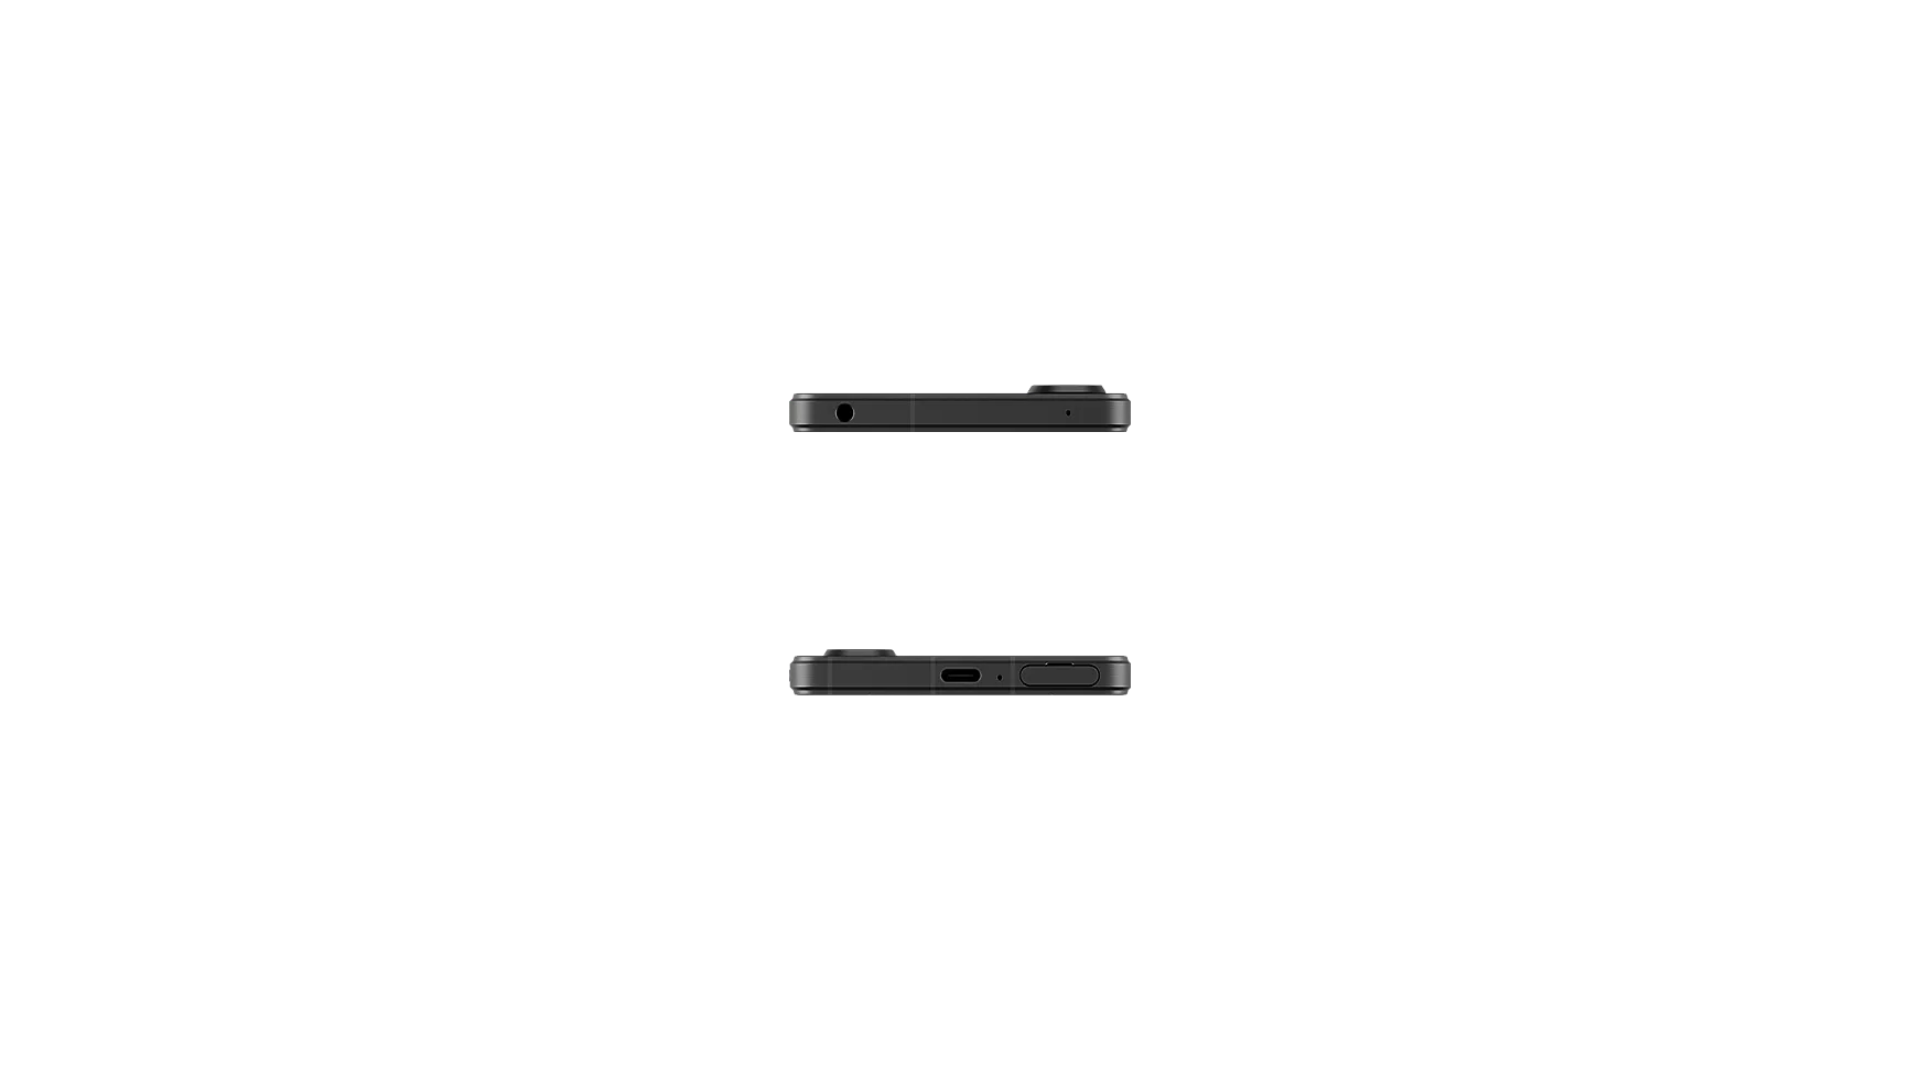 Sony Xperia 1 VI (12GB/256GB) โซนี่ เอ็กซ์พีเรีย 1 VI (12GB/256GB) : ภาพที่ 5